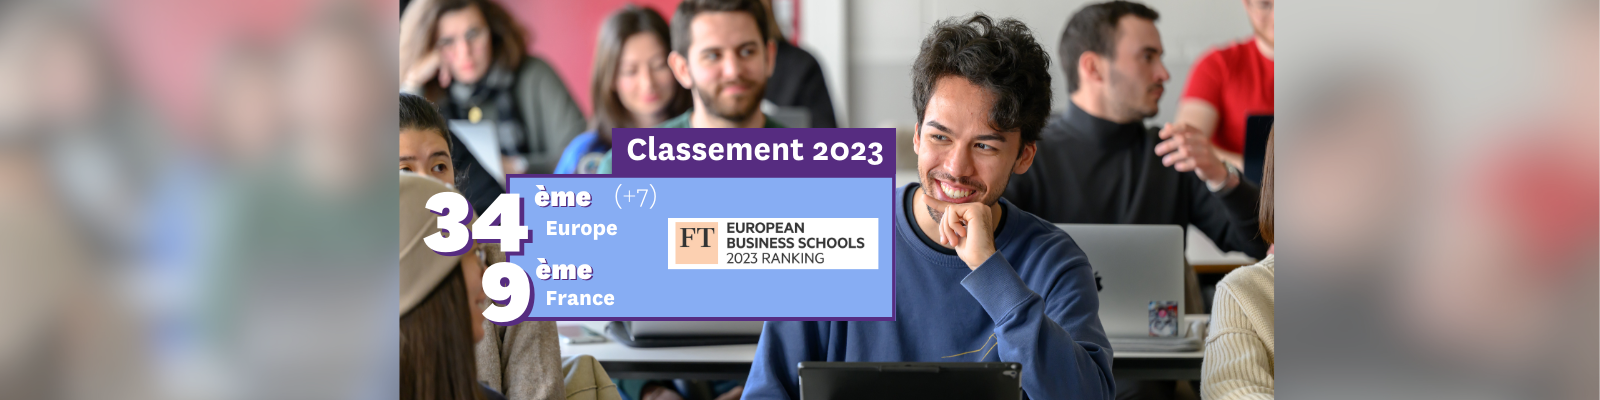 Classement du Financial Times European BS 2023- NEOMA 34e